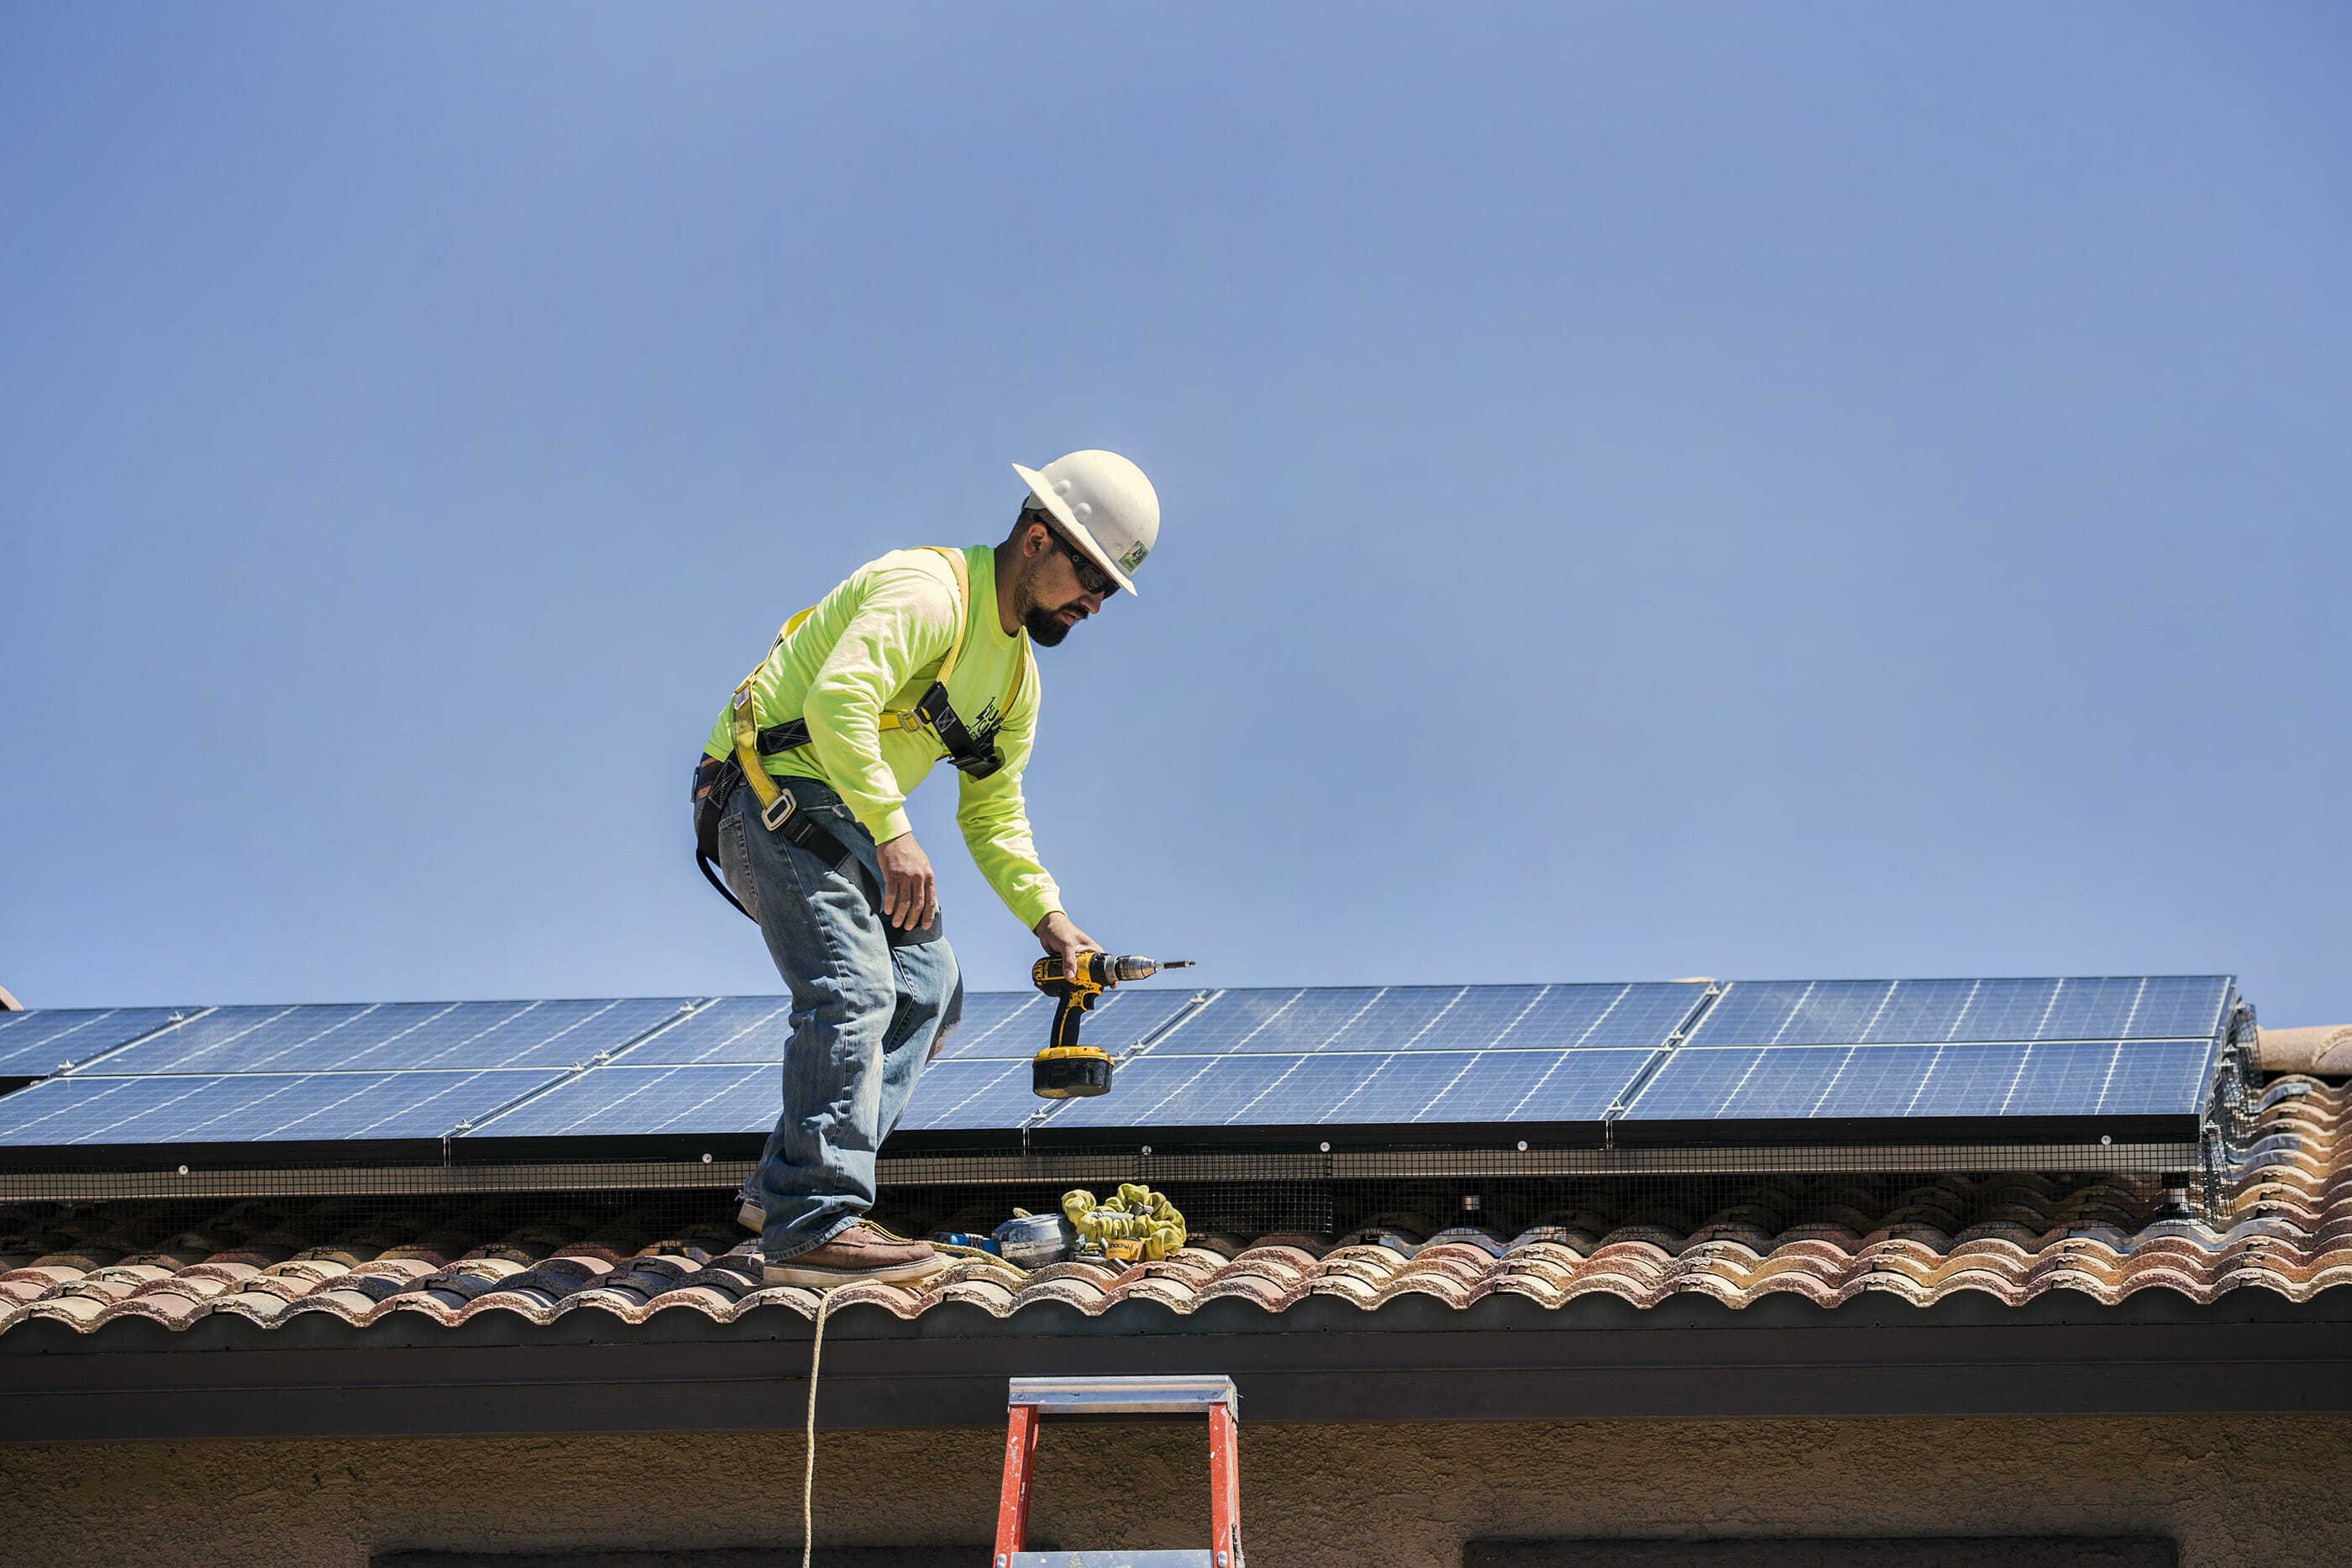 Electrician Mario Rojas with 1 Sun Solar inspects solar panels in Las Vegas